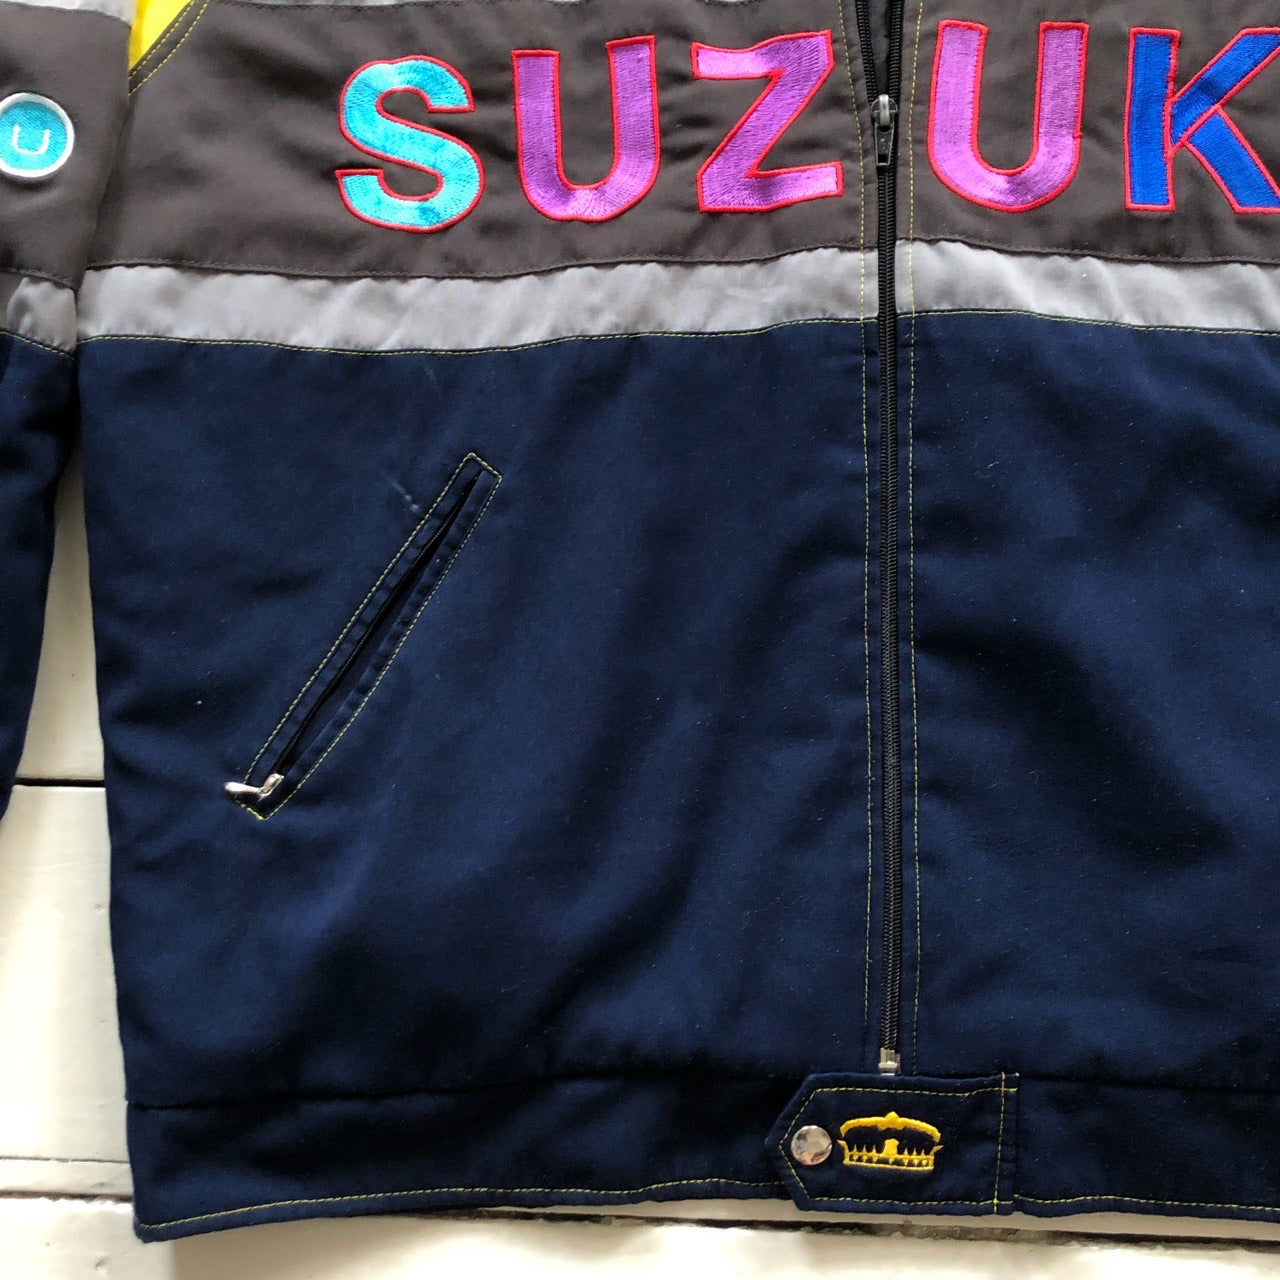 Suzuki Vintage Bomber Jacket (Large)